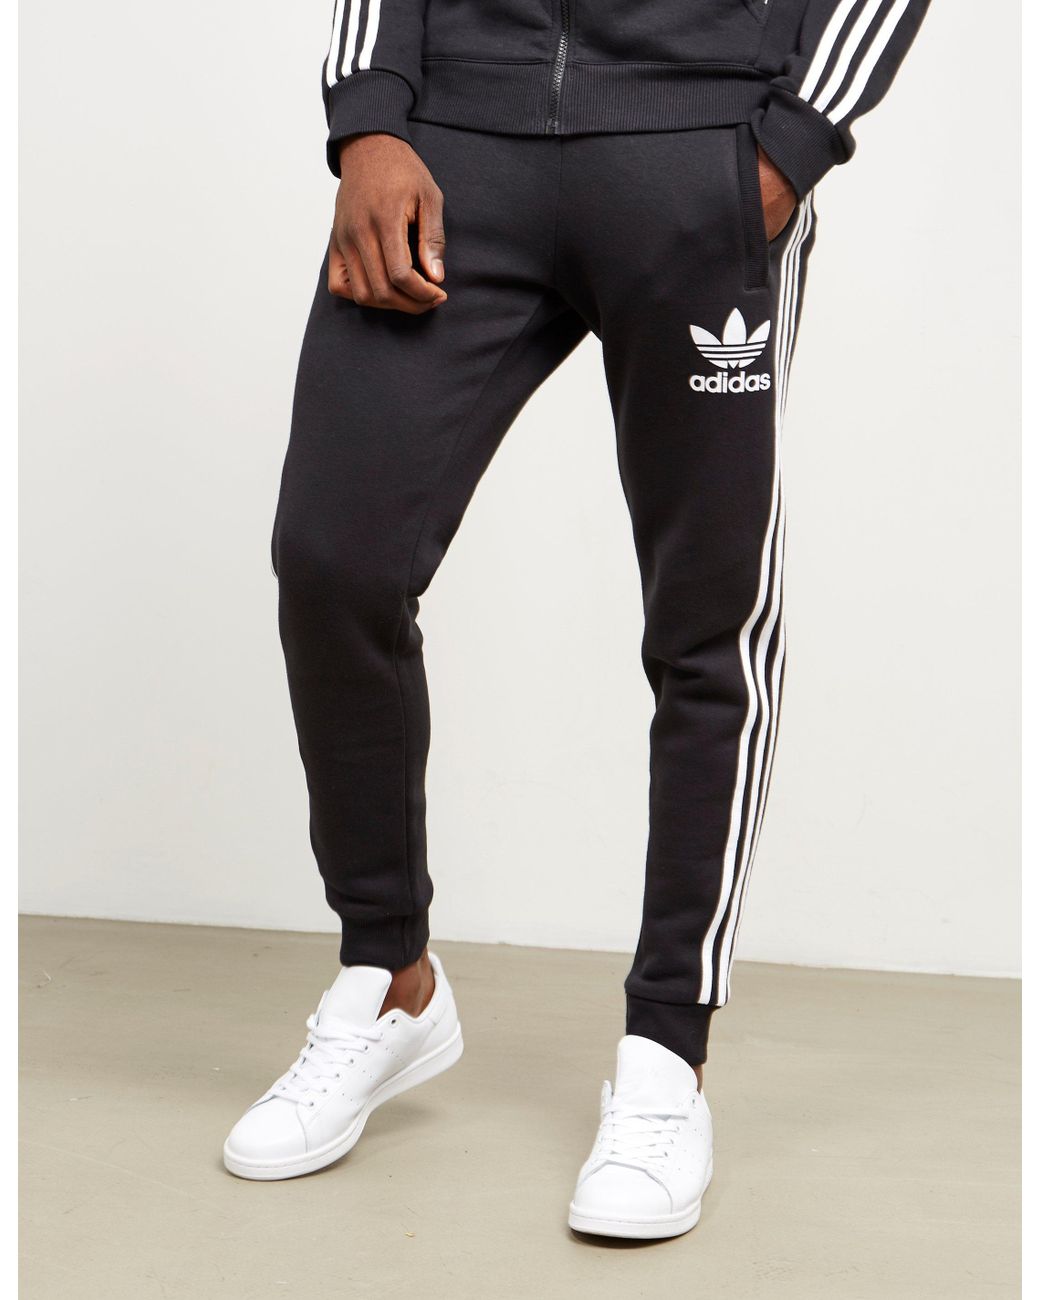 adidas Originals California Track Pants Black/white for Men | Lyst